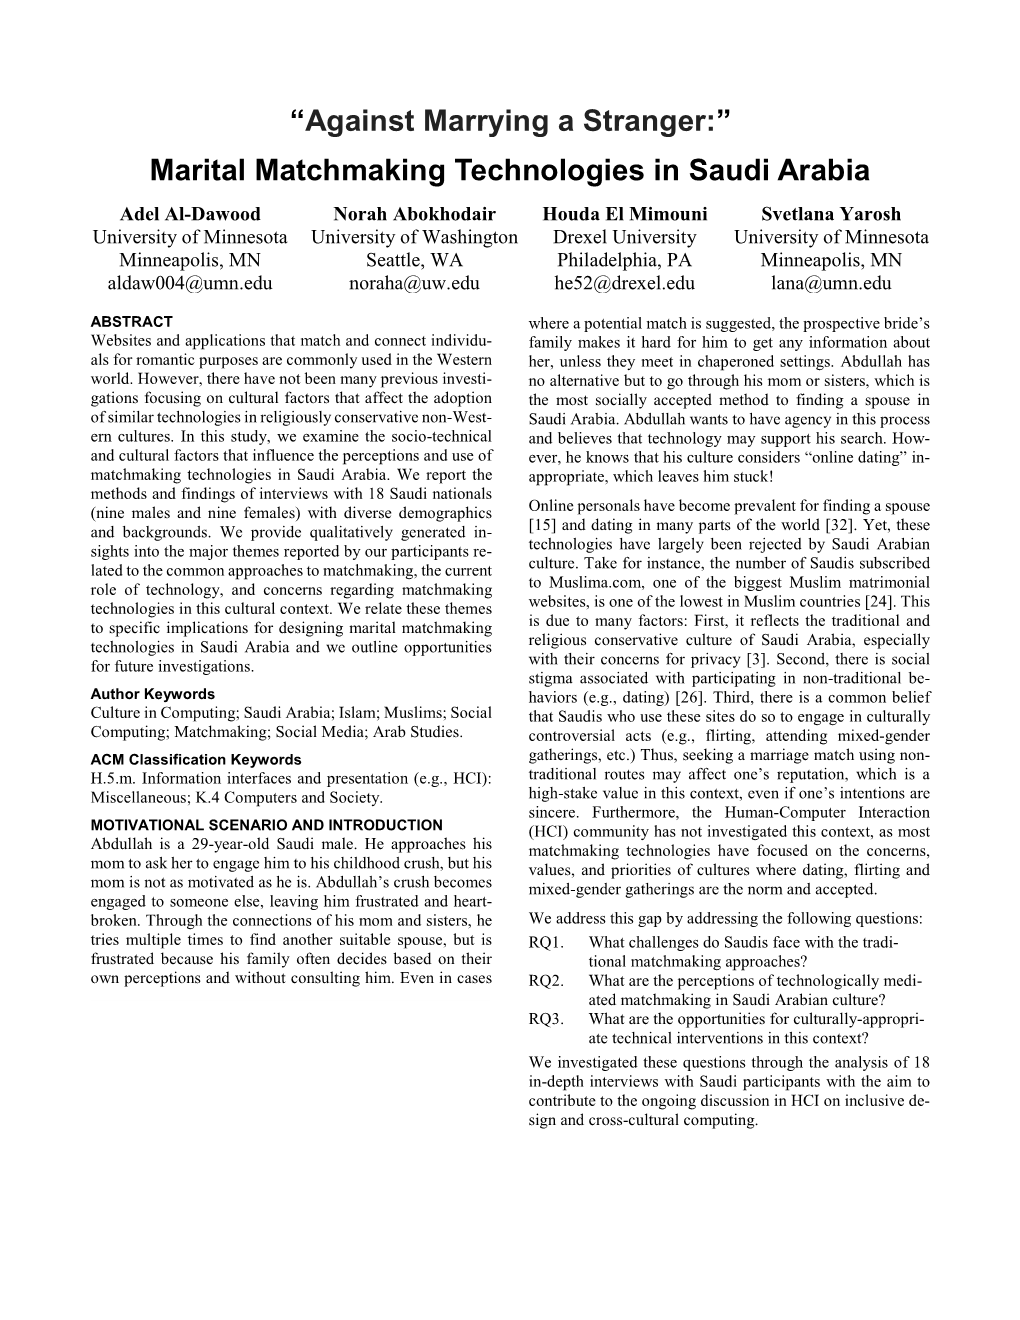 Marital Matchmaking Technologies in Saudi Arabia